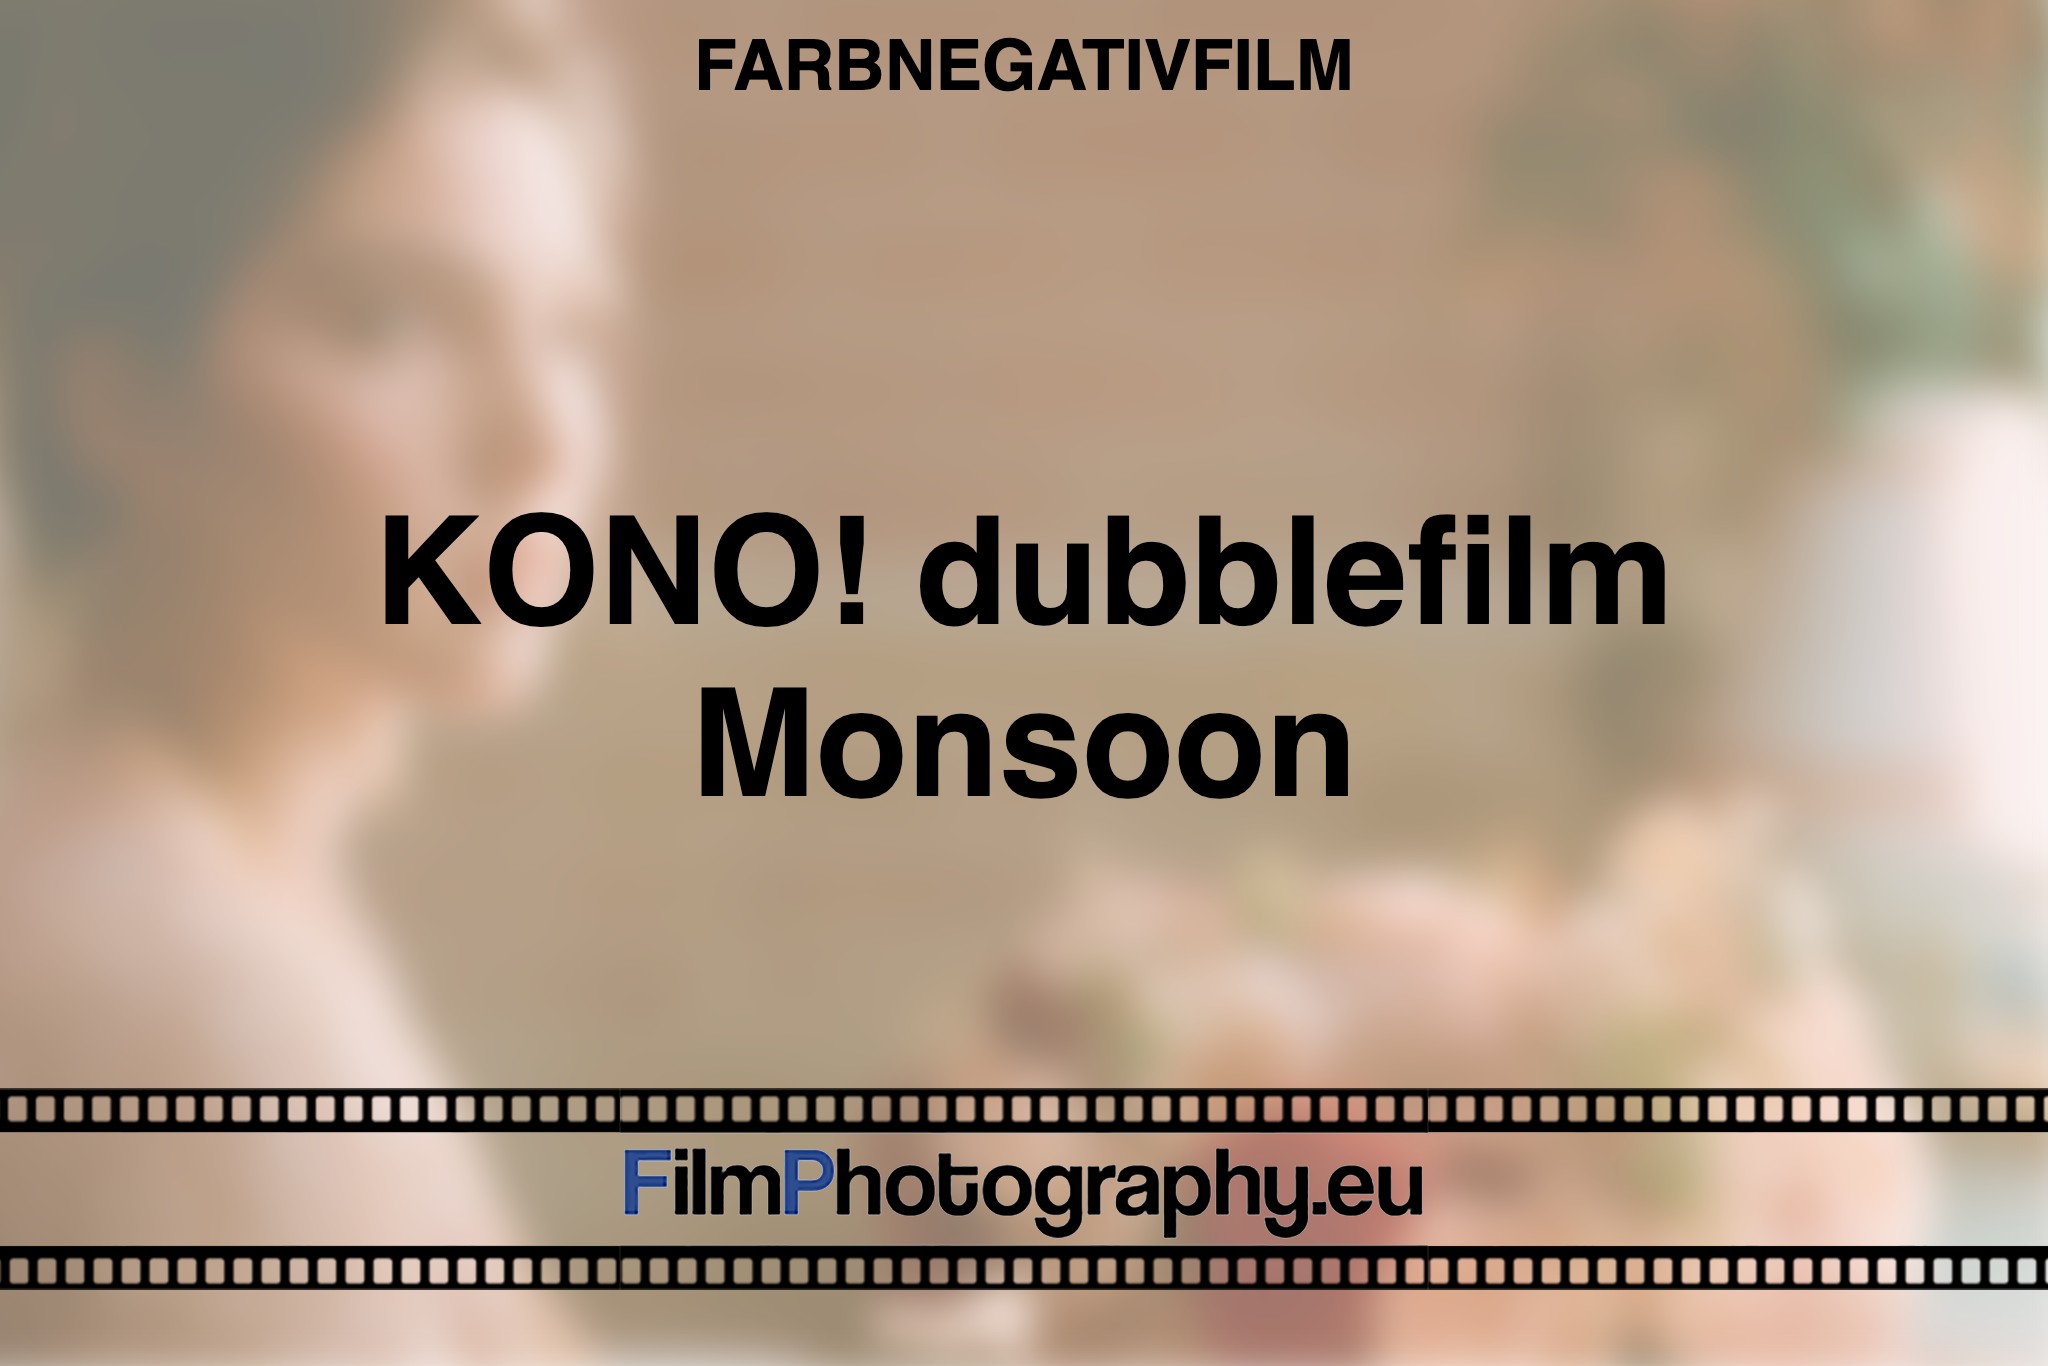 kono-dubblefilm-monsoon-farbnegativfilm-bnv